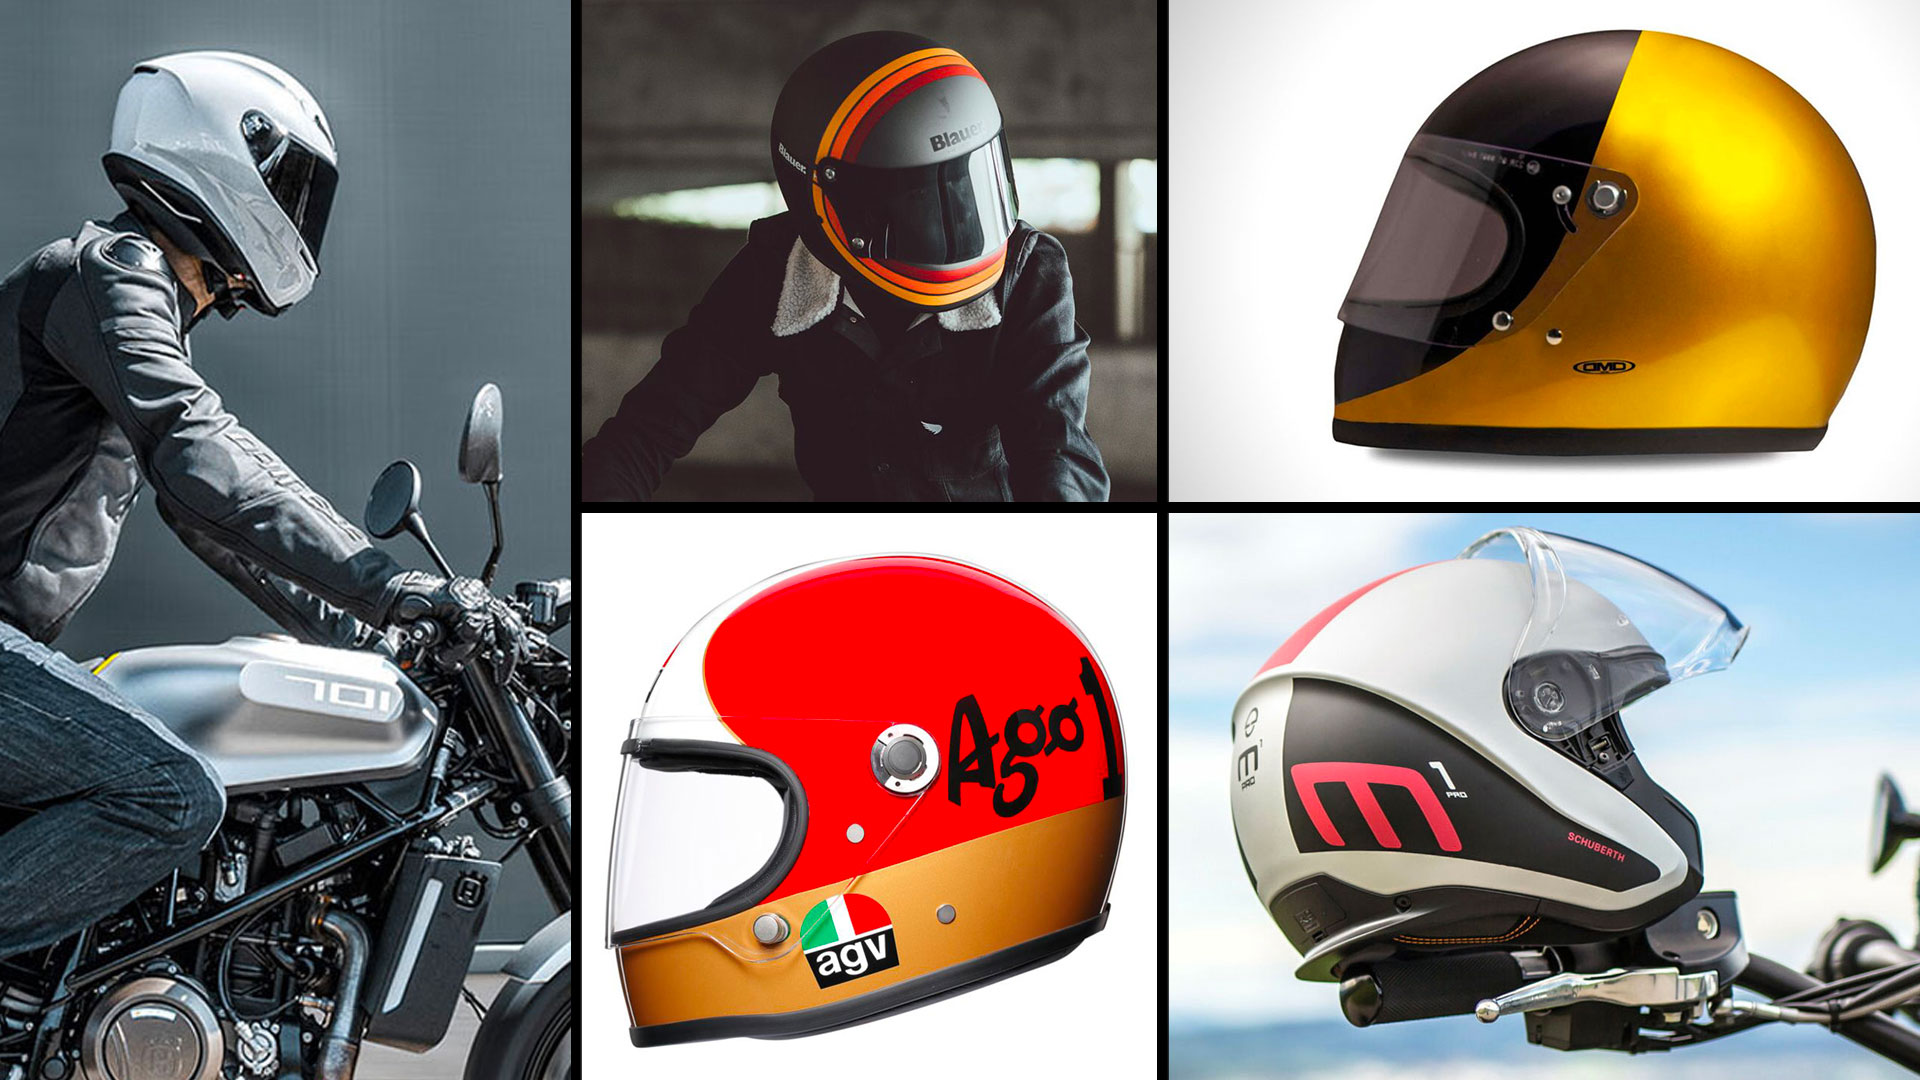 Helmet Jet bandit style, special for custom, harley davidson, triumph